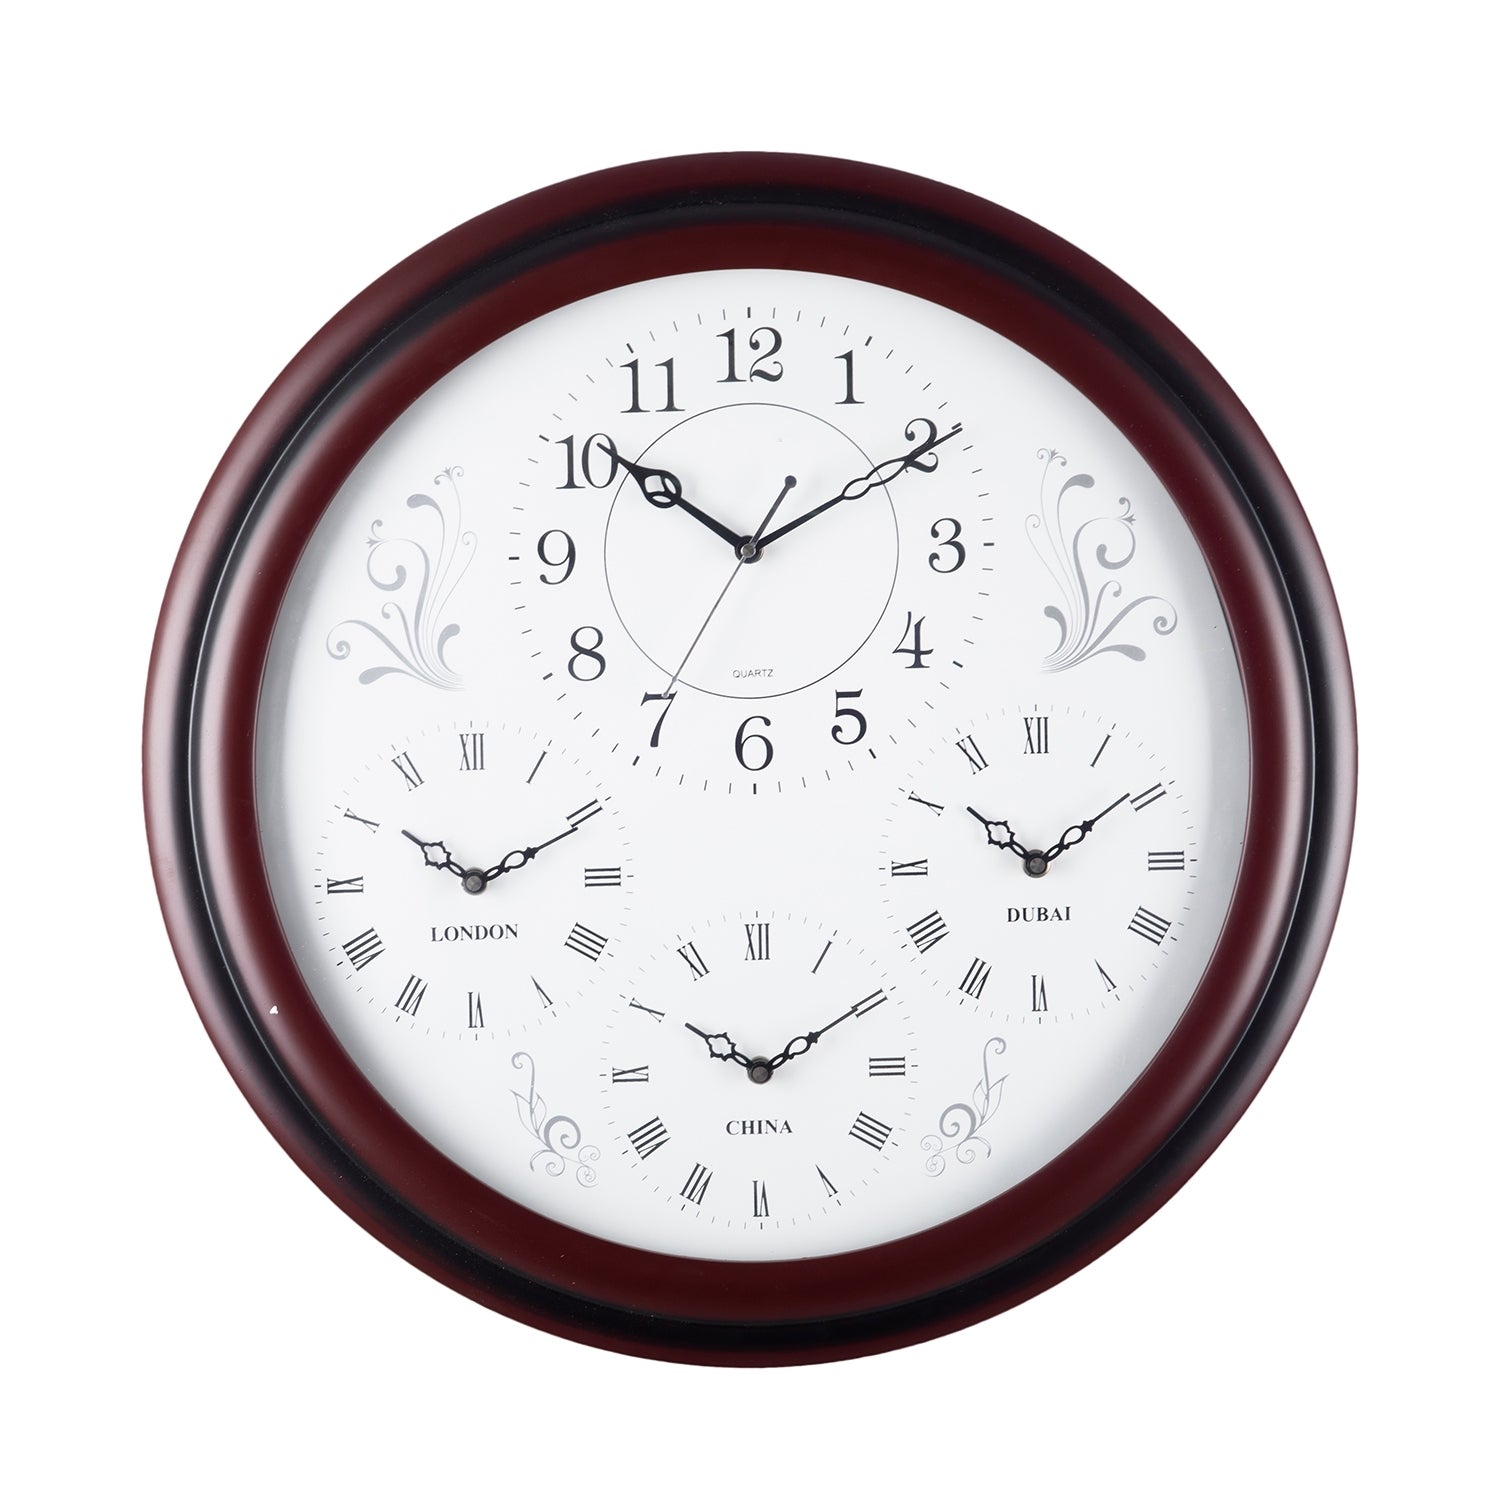 Premium Decorative Analog Brown Round Wooden Wall Clock